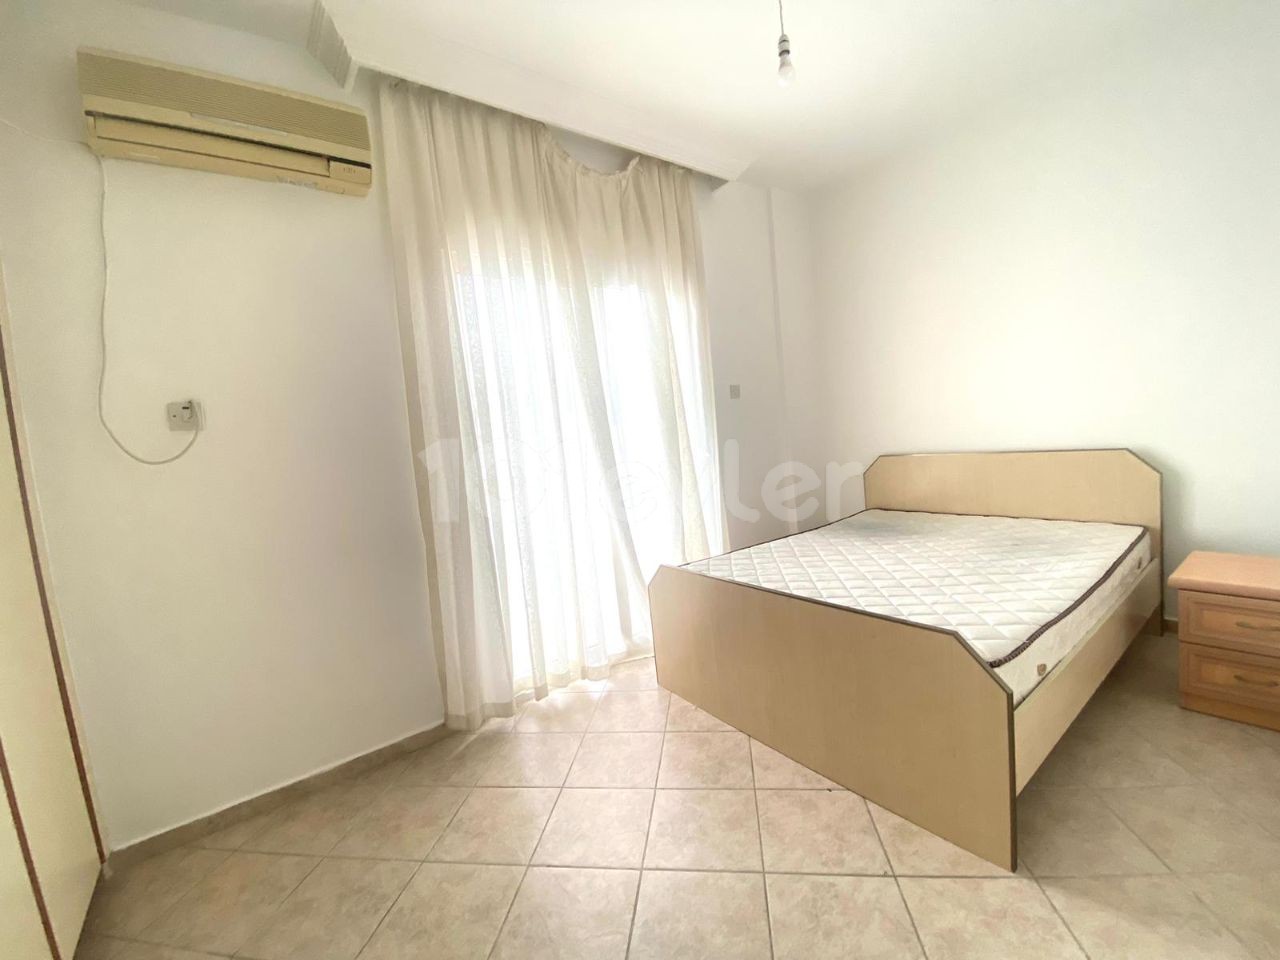 2+1 Furnished Flat For Rent In Upper Girne